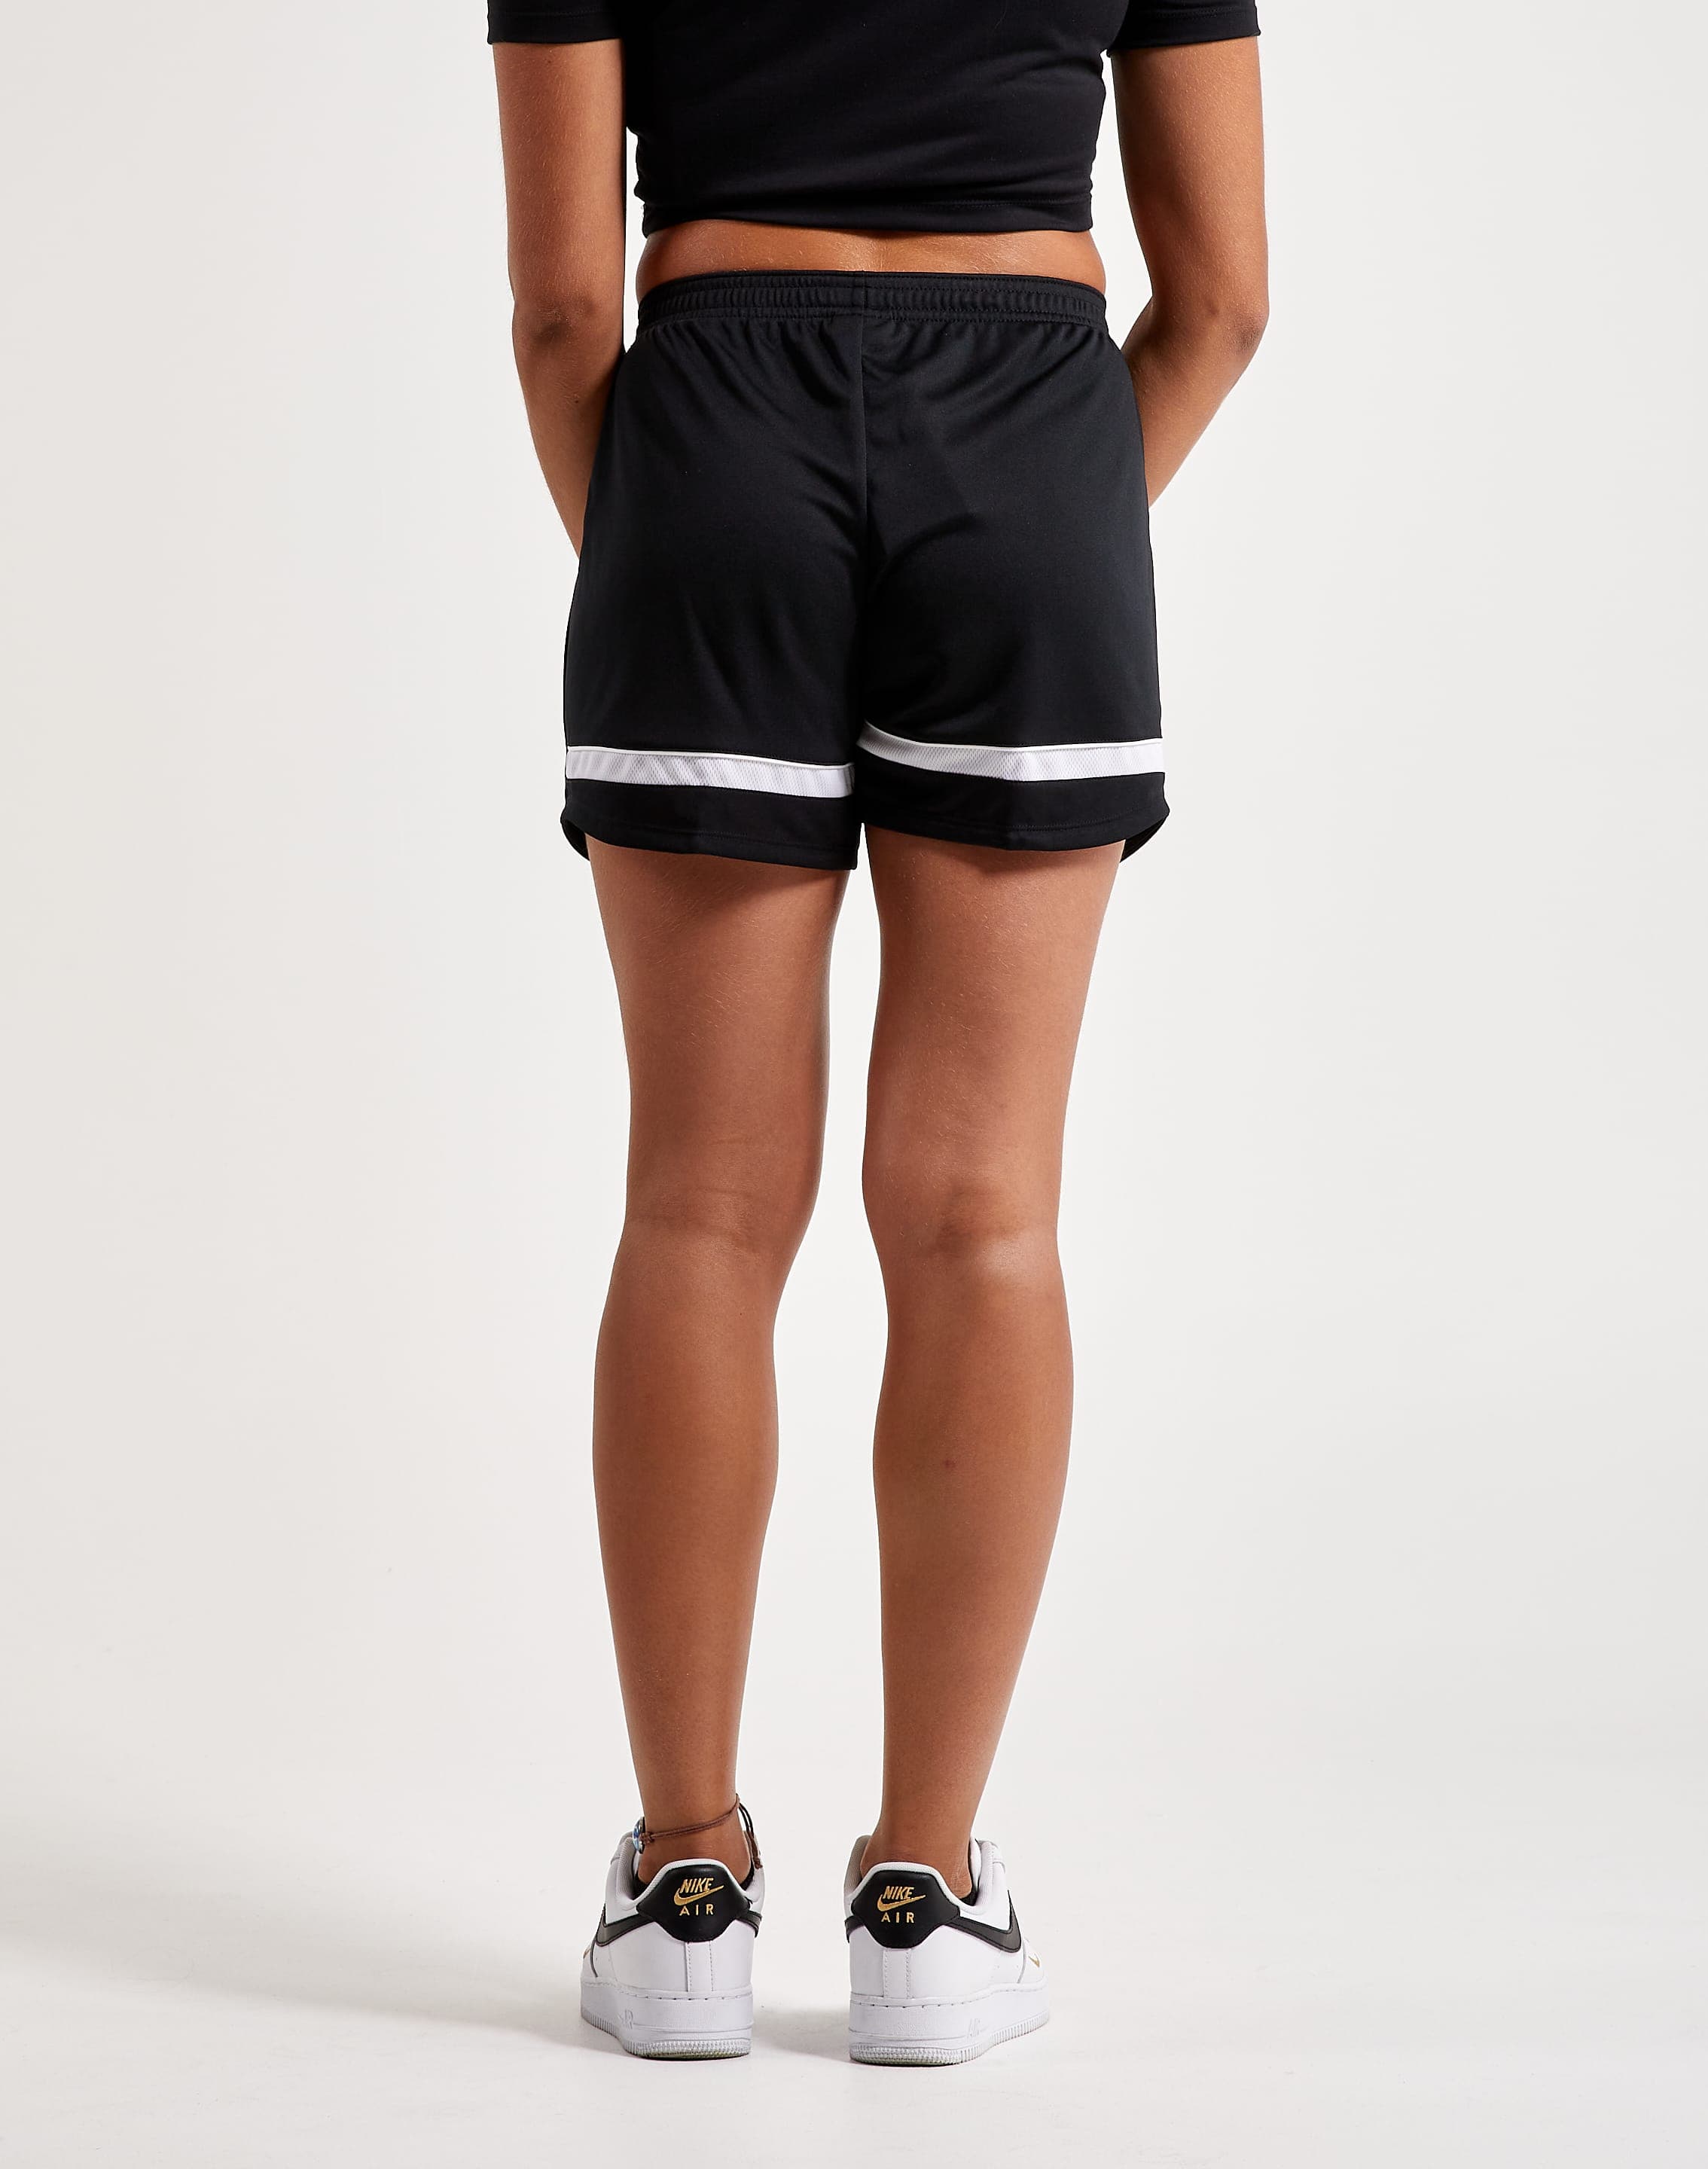 Nike Women's Dri-FIT Knit II Soccer Shorts - Black / White